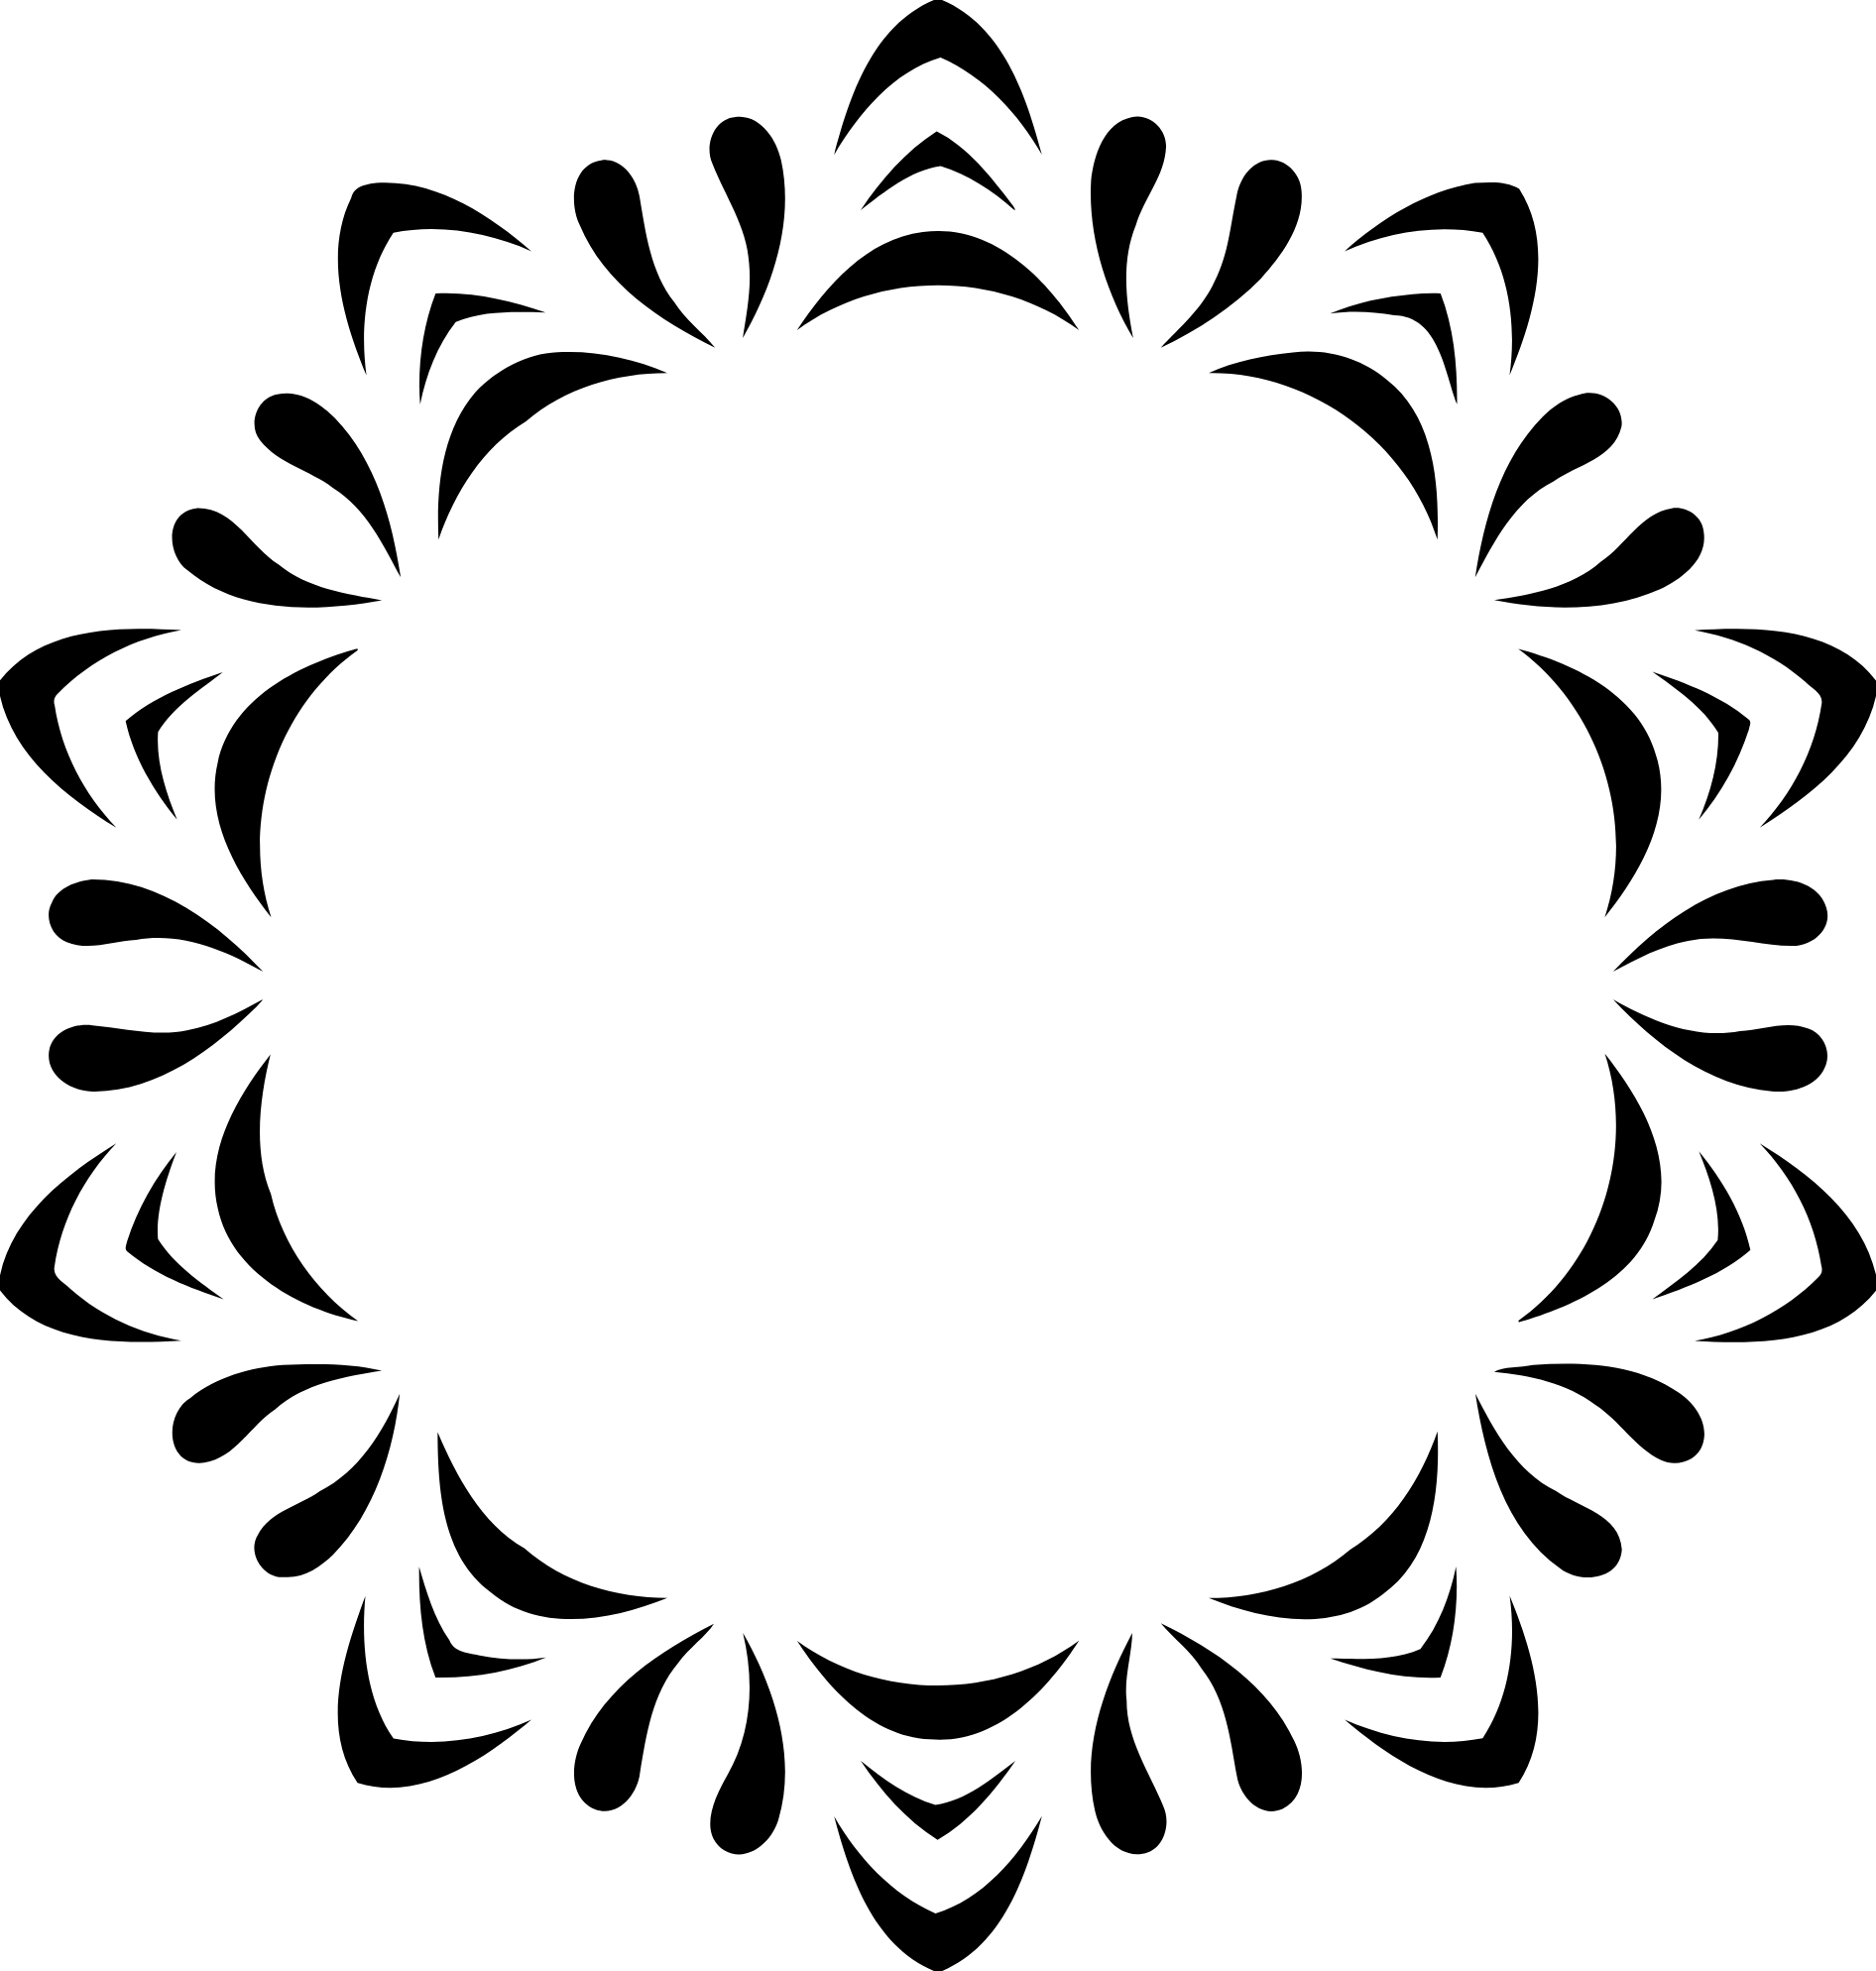 Circle Border Black And White - Portable Network Graphics (2350x2350)